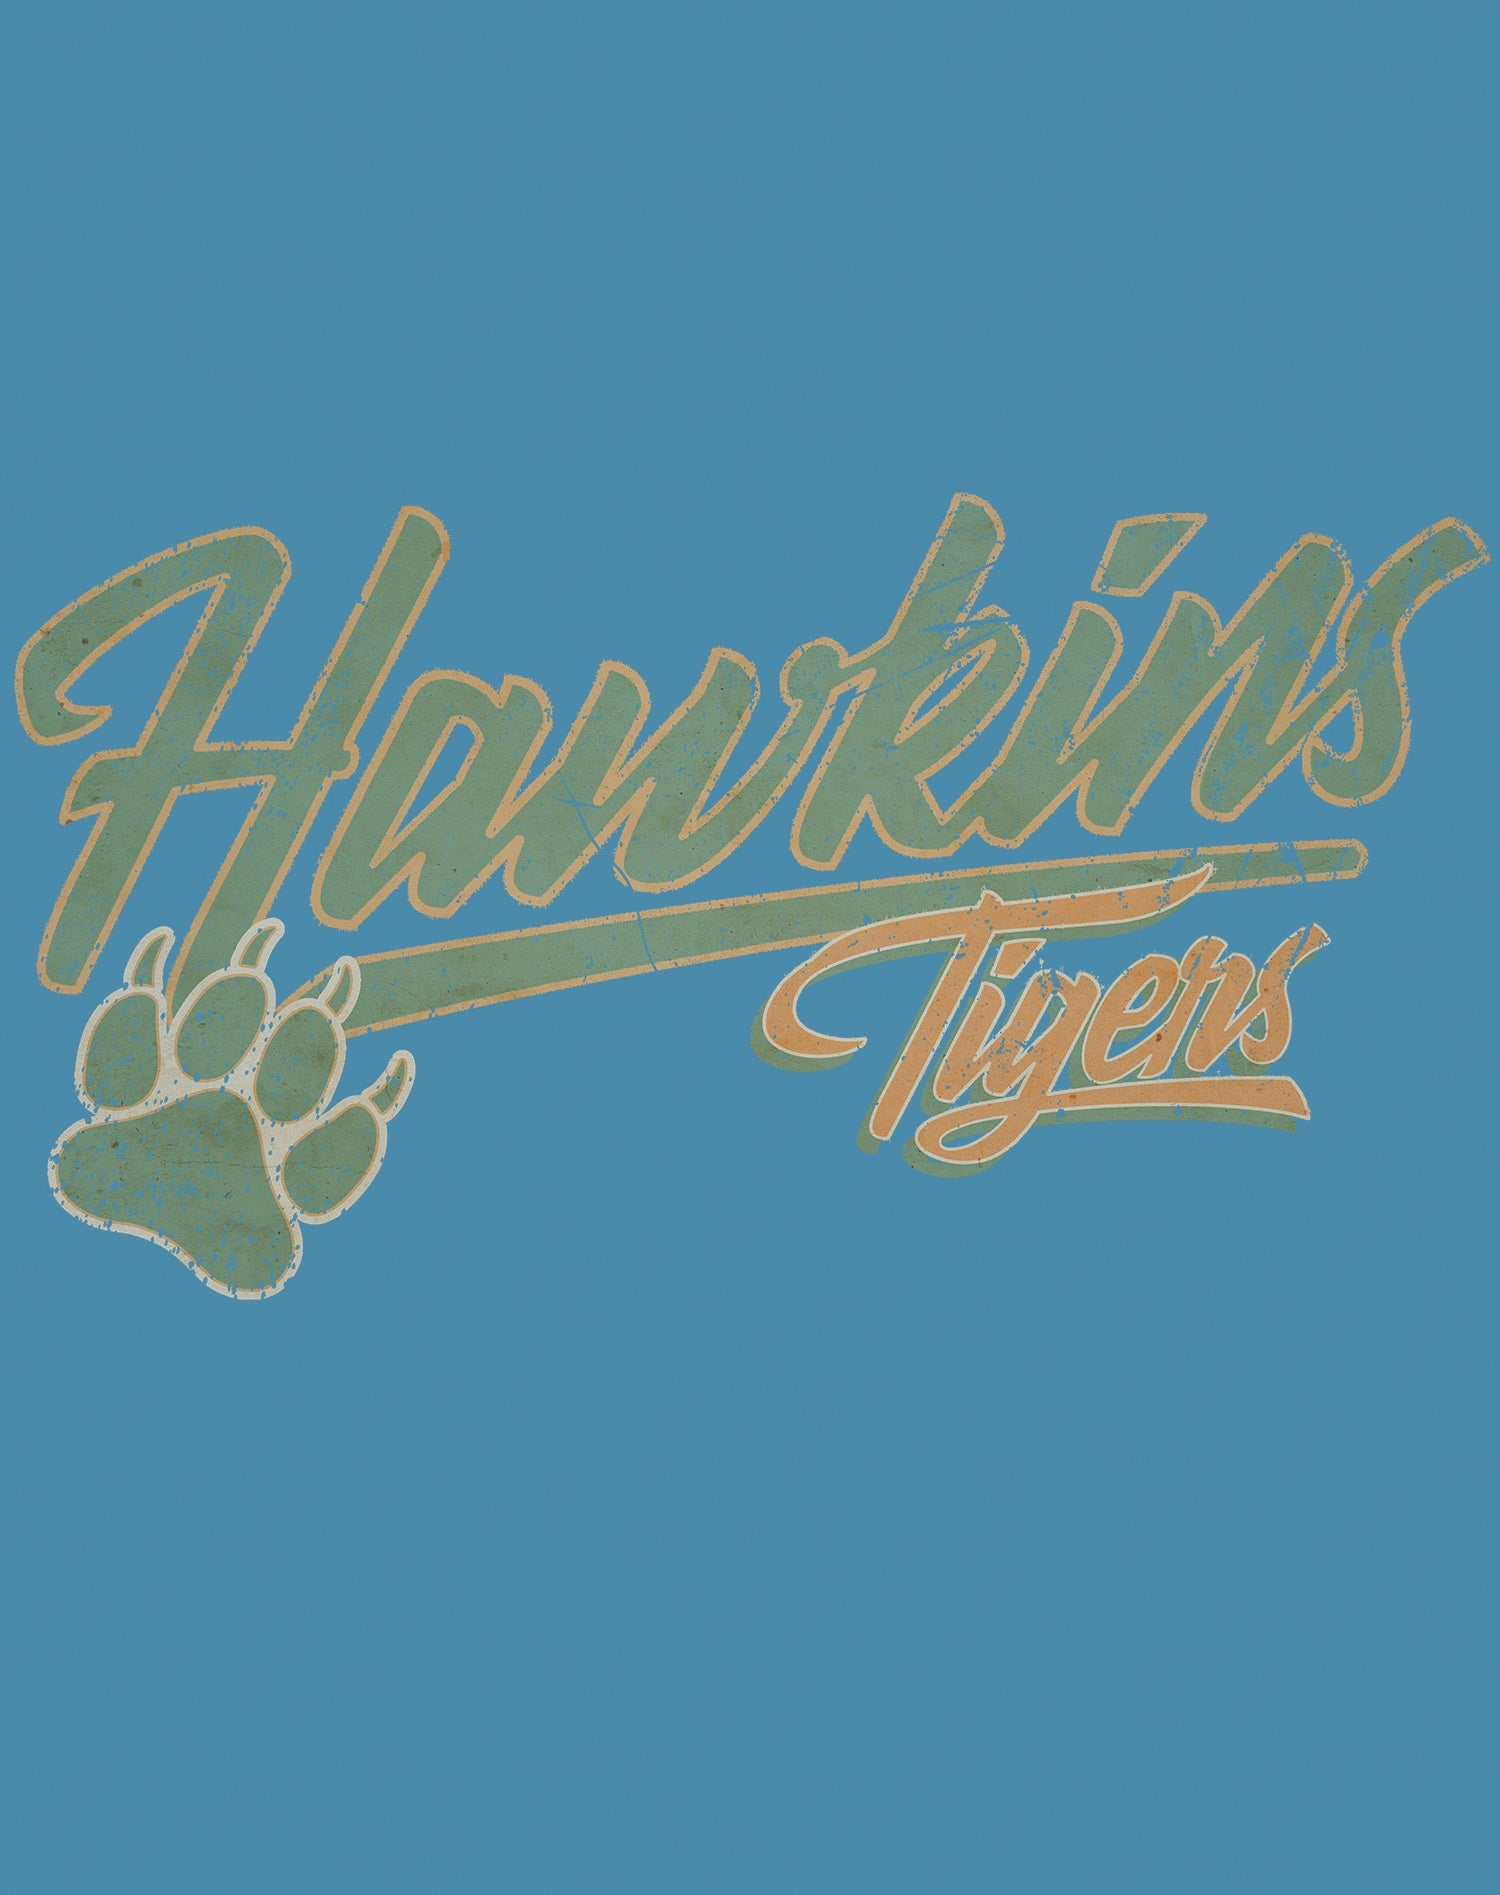 Stranger Things Hawkins Tigers Varsity Vintage Official Women's T-Shirt